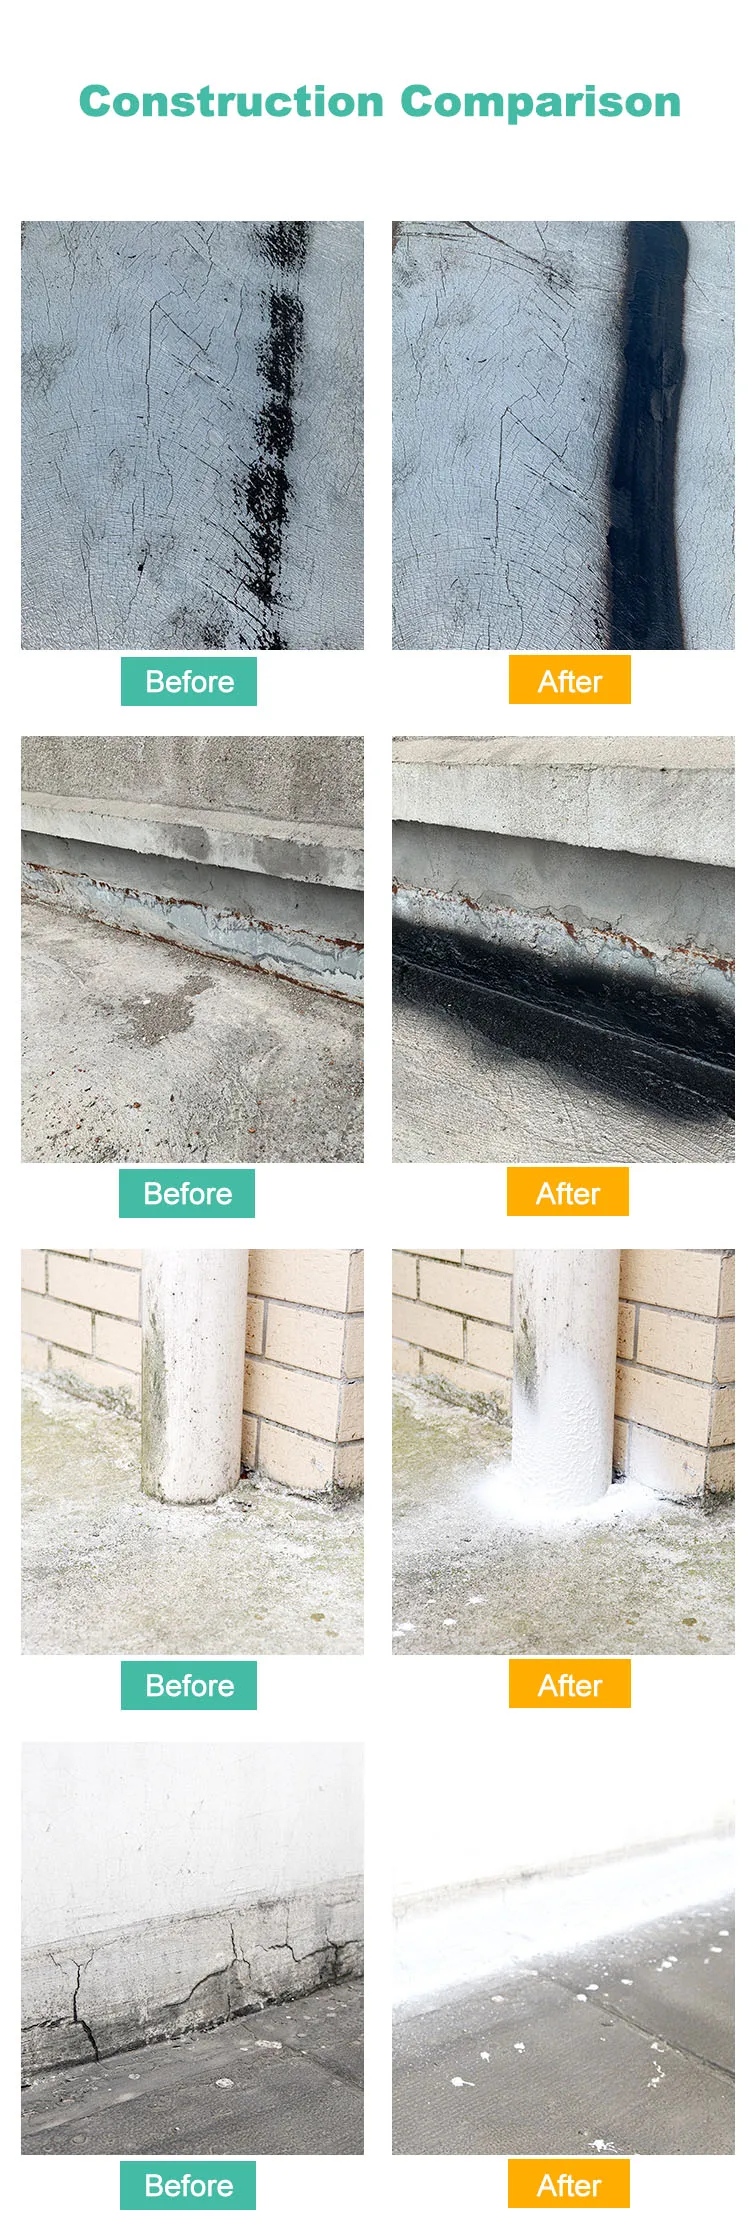 AEROPAK Waterproofing Leak Sealer Spray Rubber Stop Leaking Spray Paint